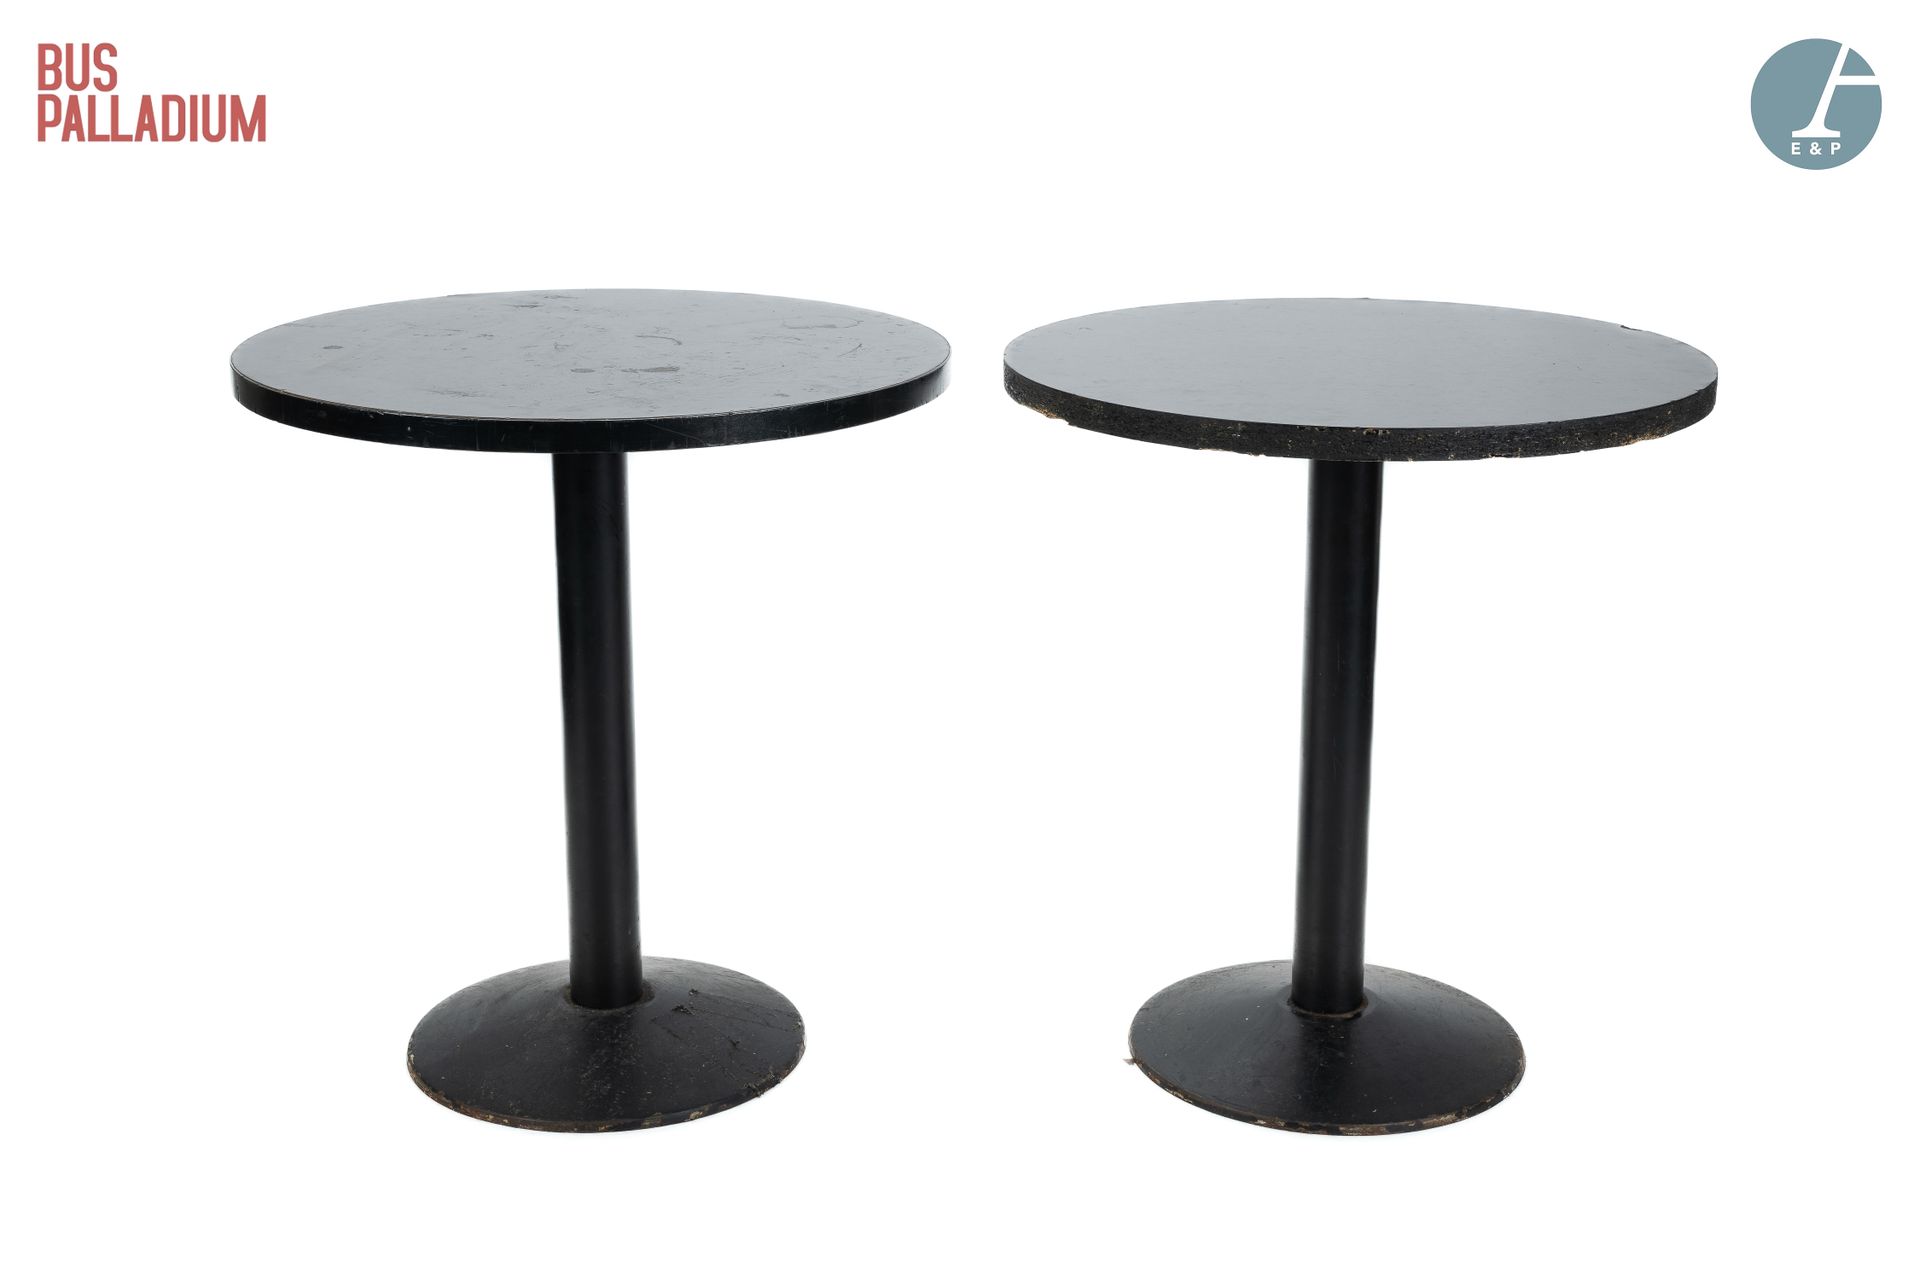 Null 从Palladium巴士出发

两张圆桌，黑色胶合板桌面，铸铁底座 

高：75厘米 - 直径：69.5厘米

污点、缺口--一张桌子的顶部轮廓缺失